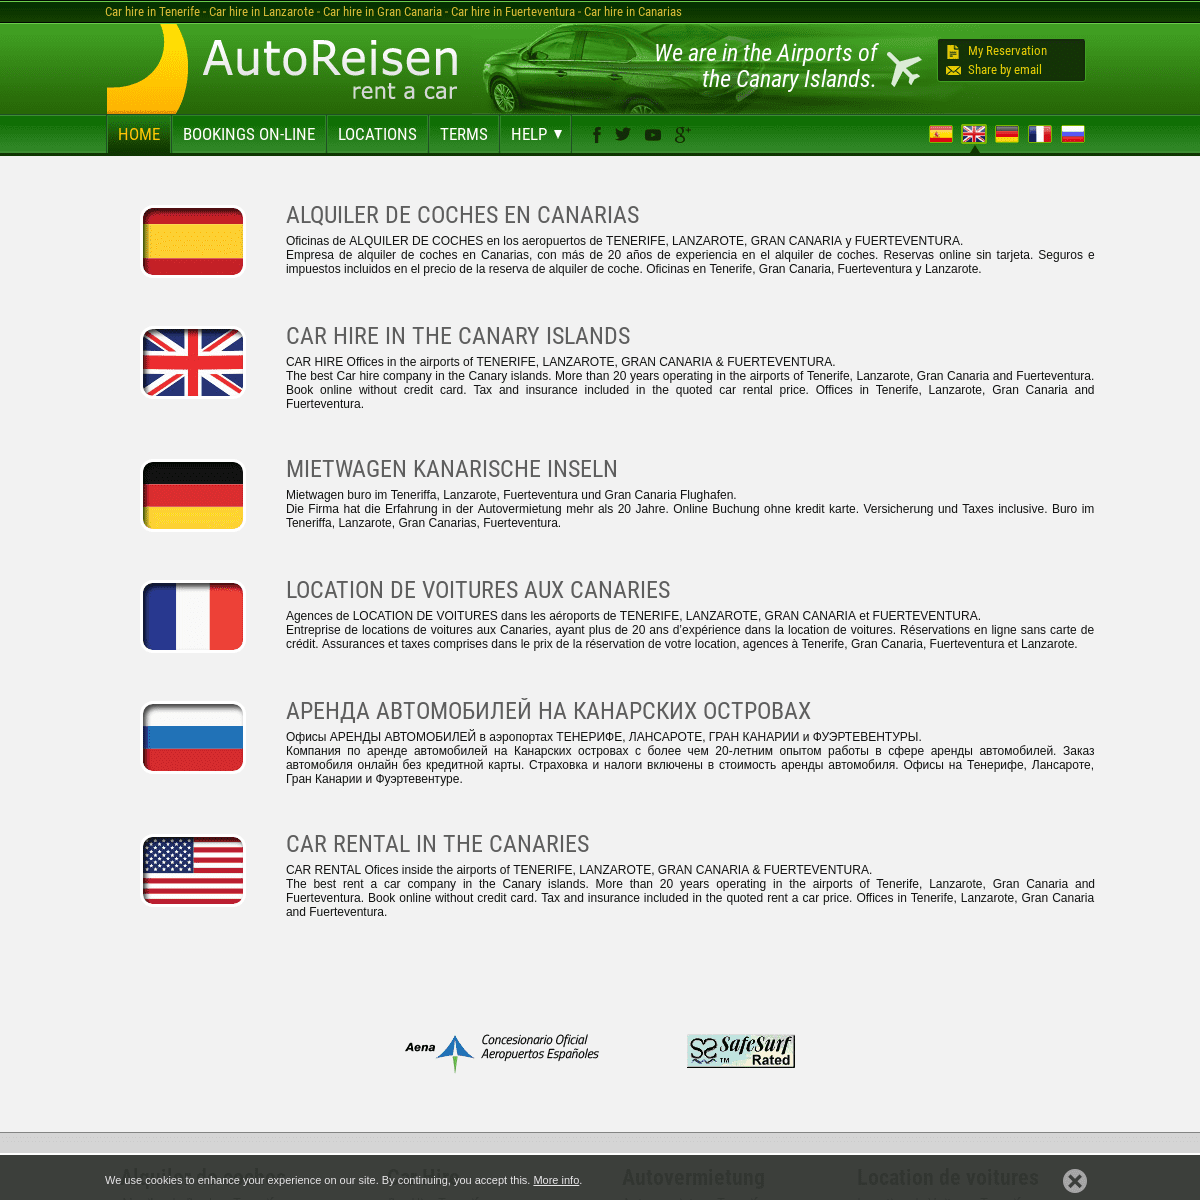 A complete backup of autoreisen.com